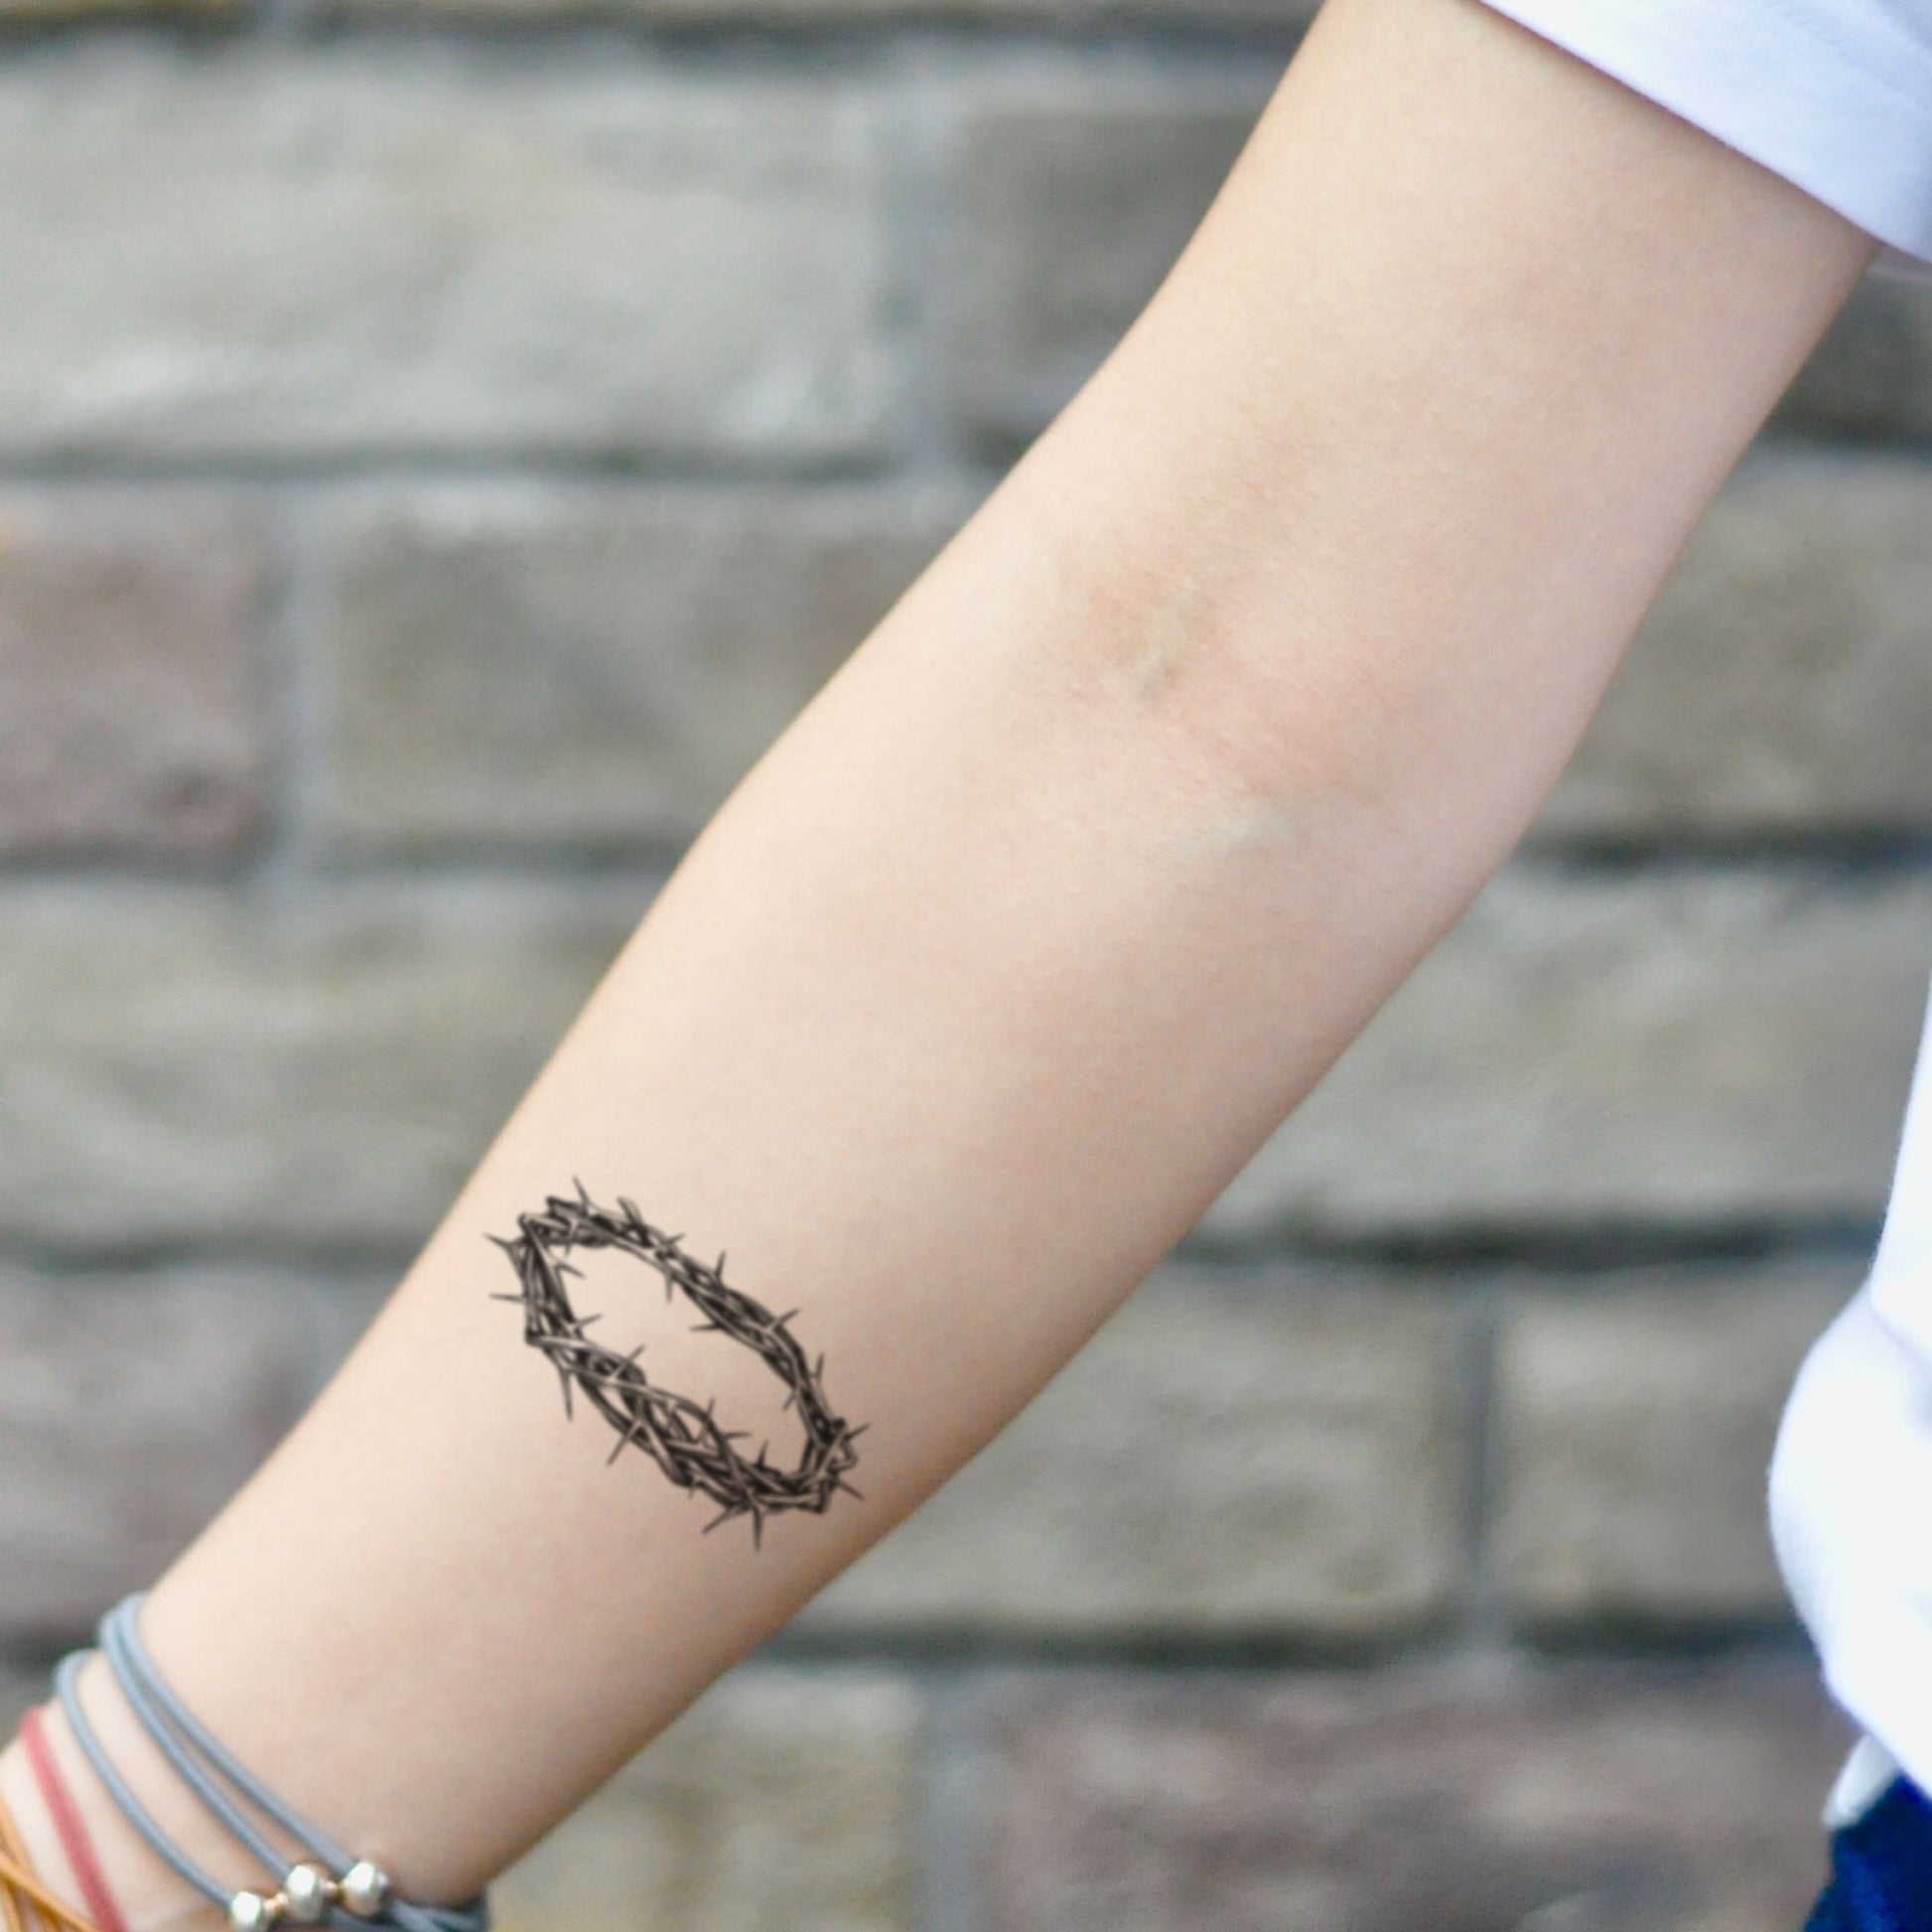 fake small crown of thorns Illustrative temporary tattoo sticker design idea on inner arm